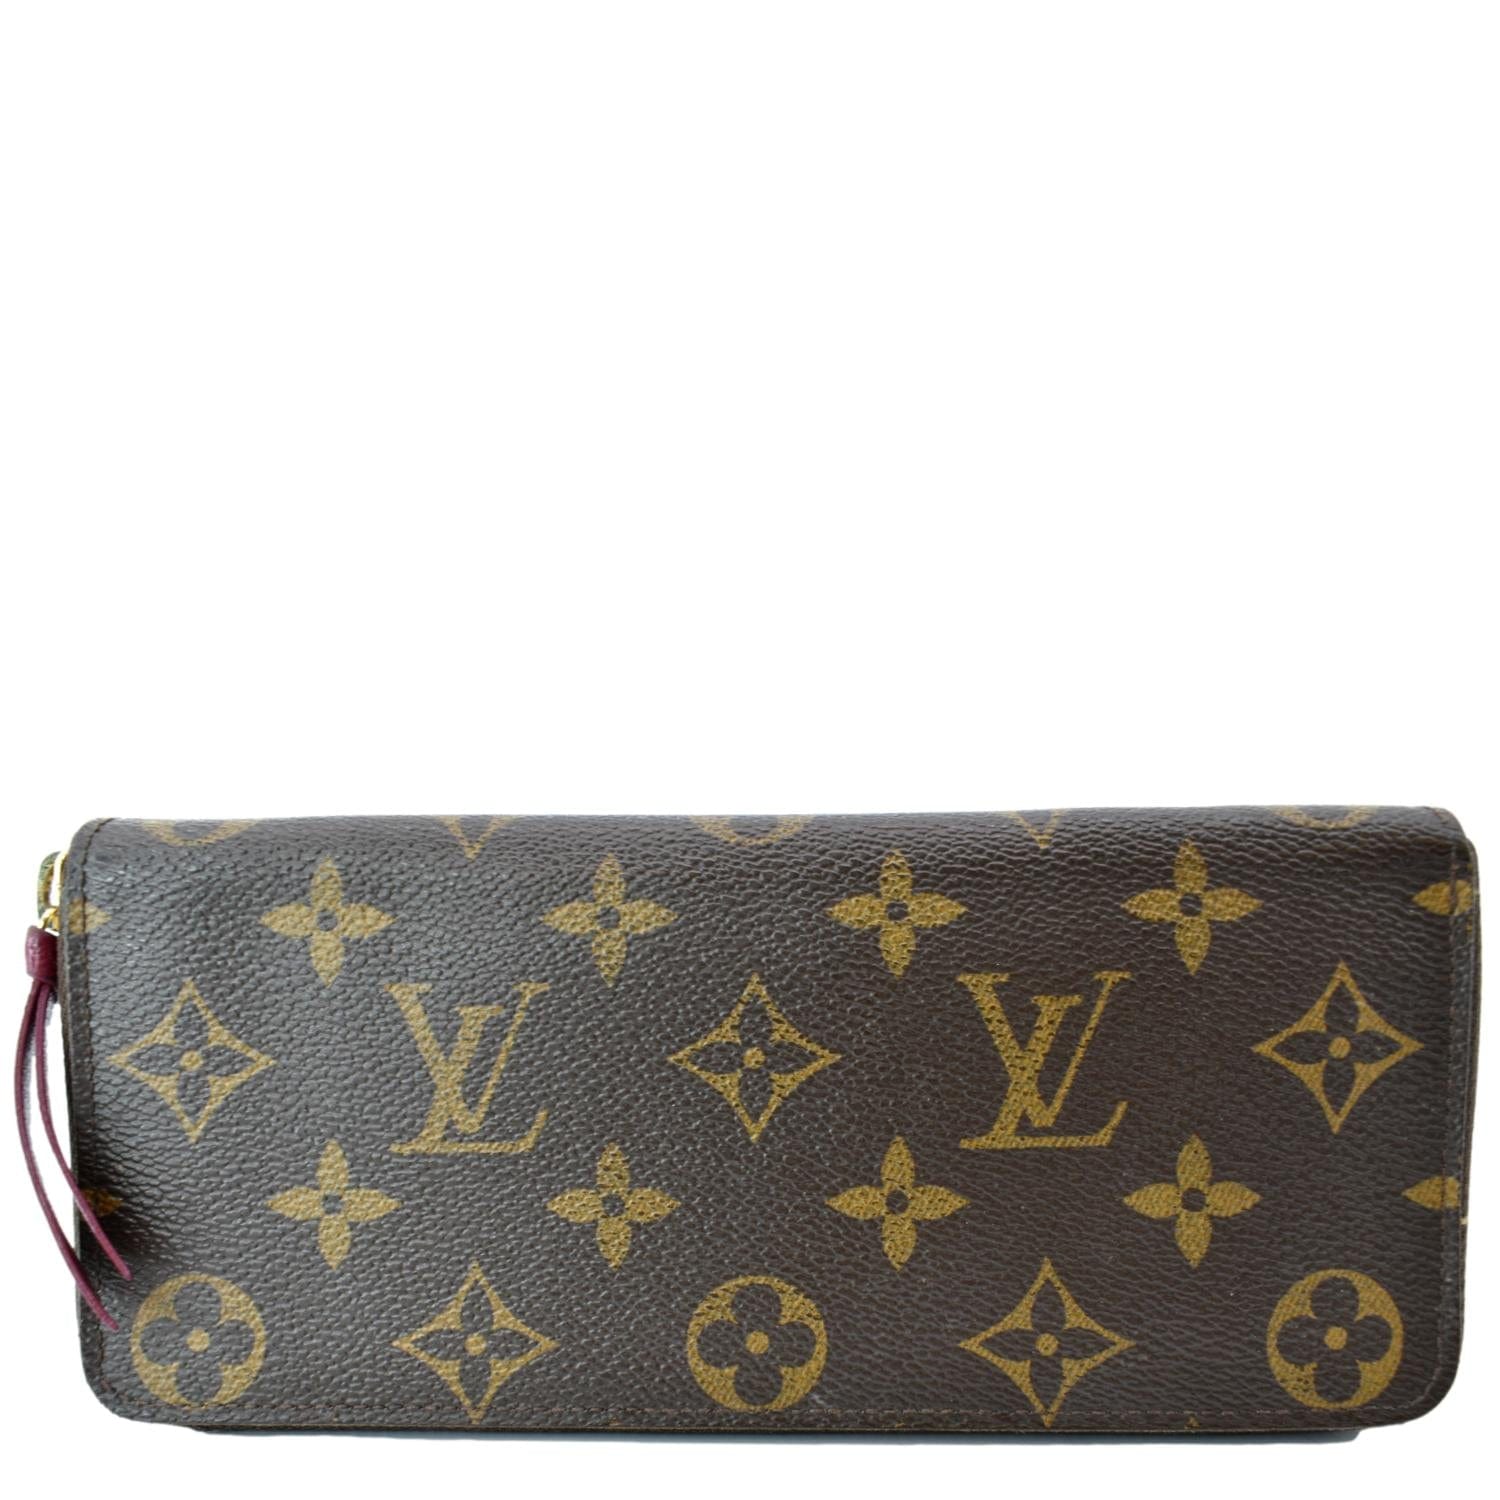 Date Code & Stamp] Louis Vuitton Damier Ebene Clemence Zippy Long Wallet